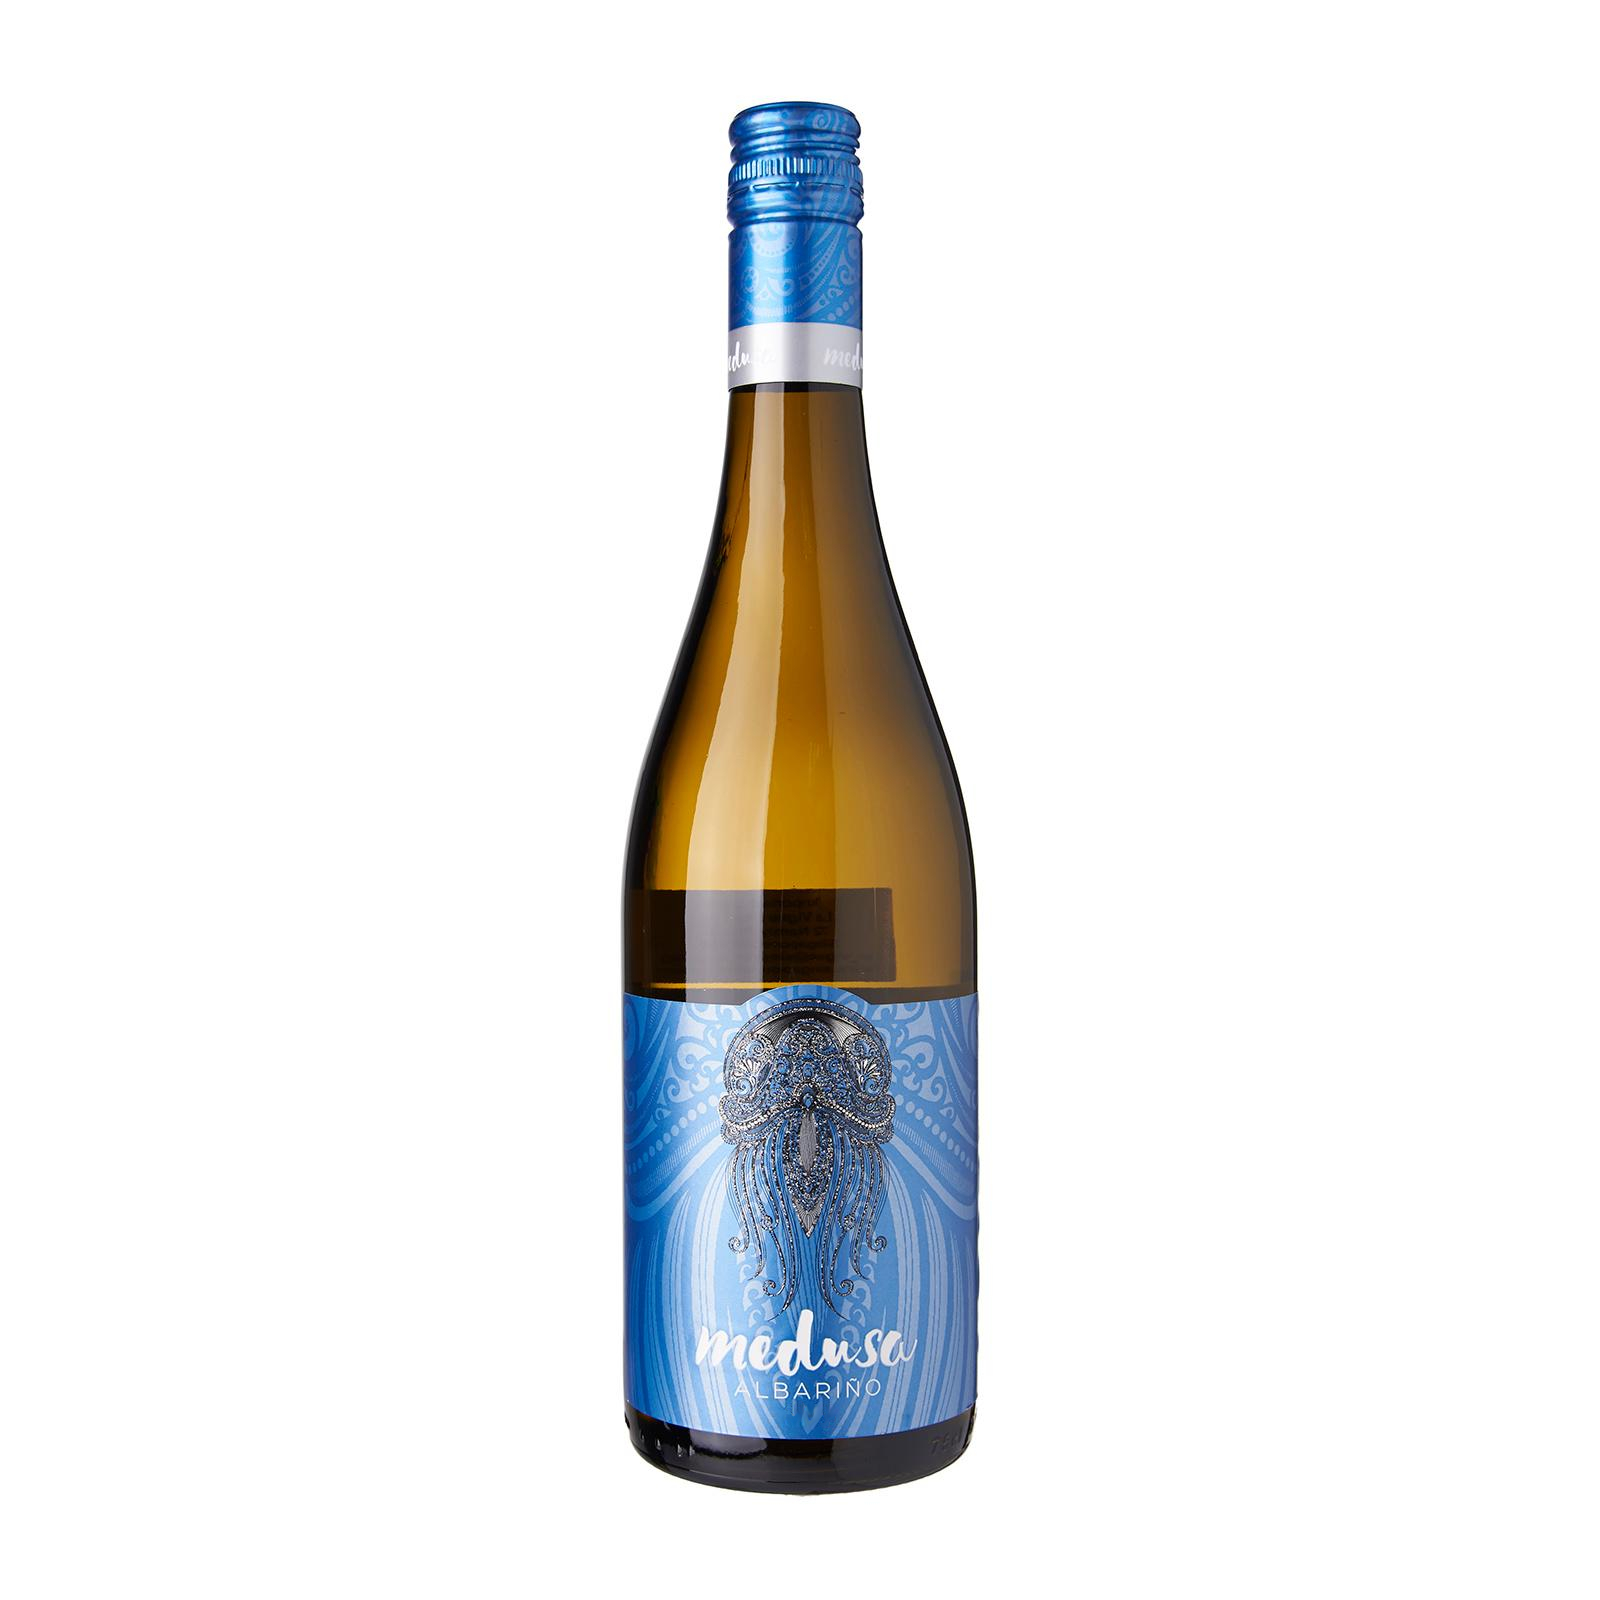 Medusa Albarino 2019 White Wine – Rias Baixas, Spain